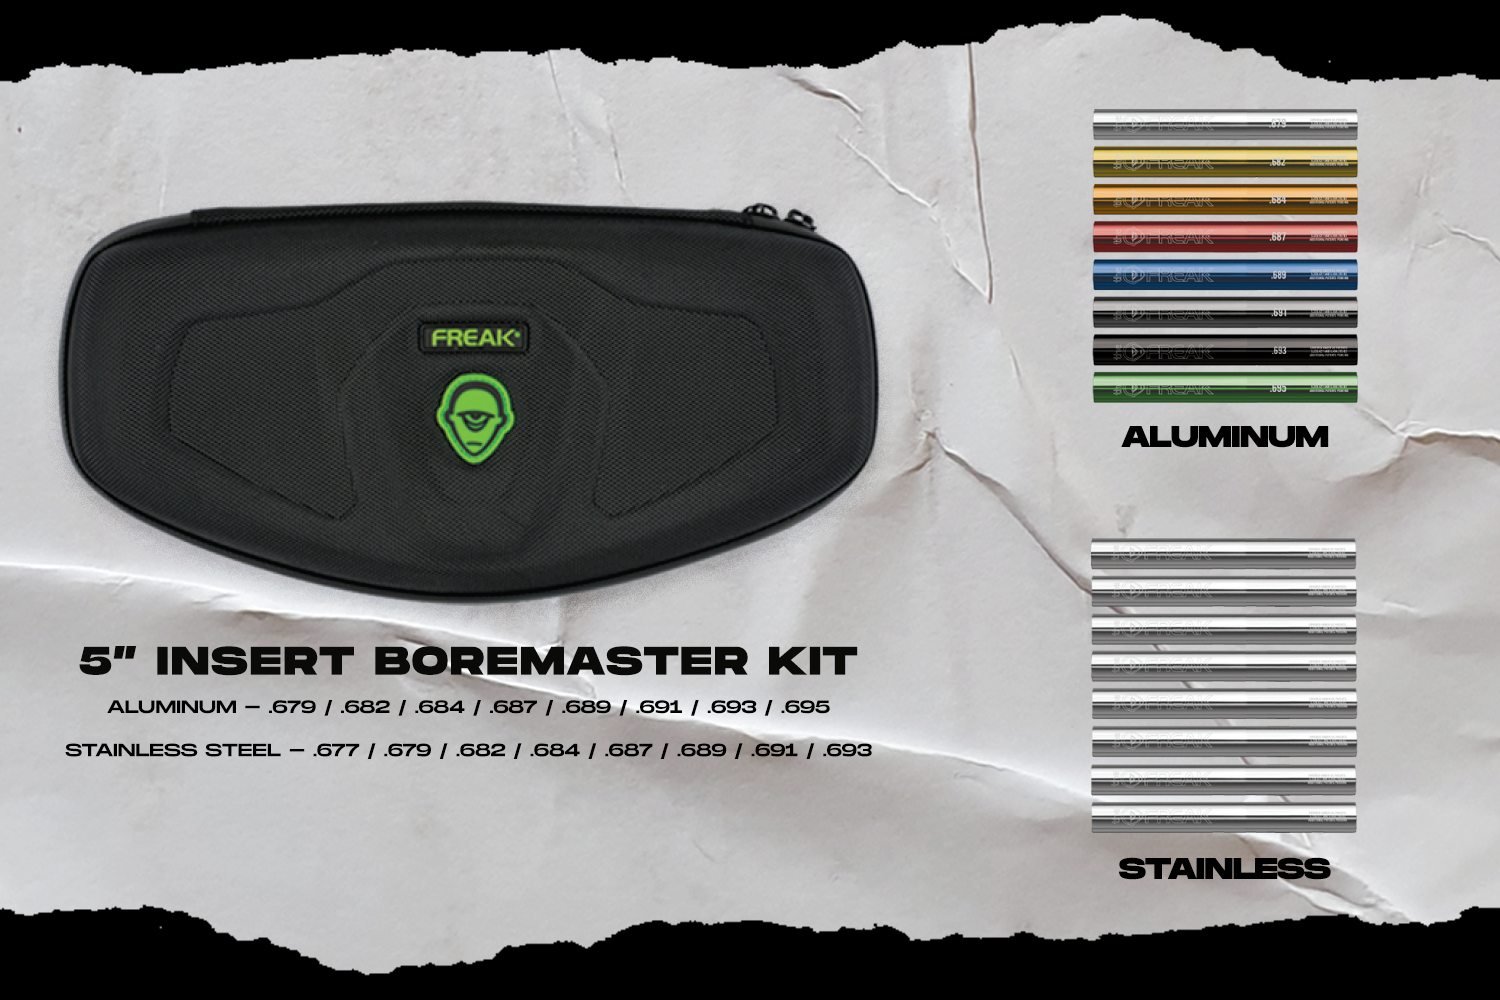 Boremaster Kit - Insertos Freak Original (Stainless - Acero Inoxidable)